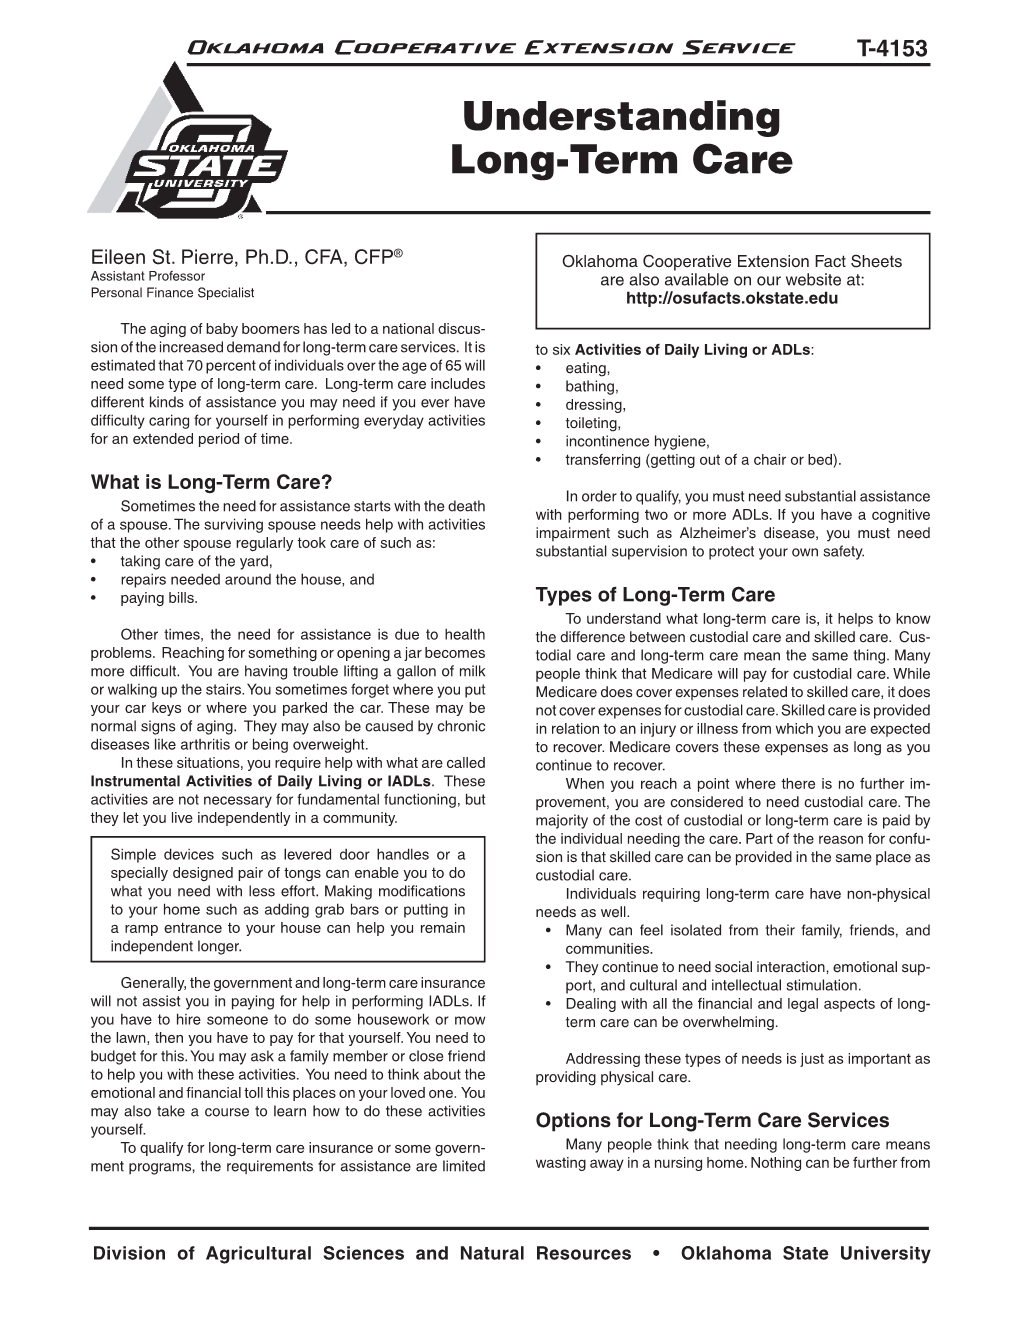 Understanding Long-Term Care